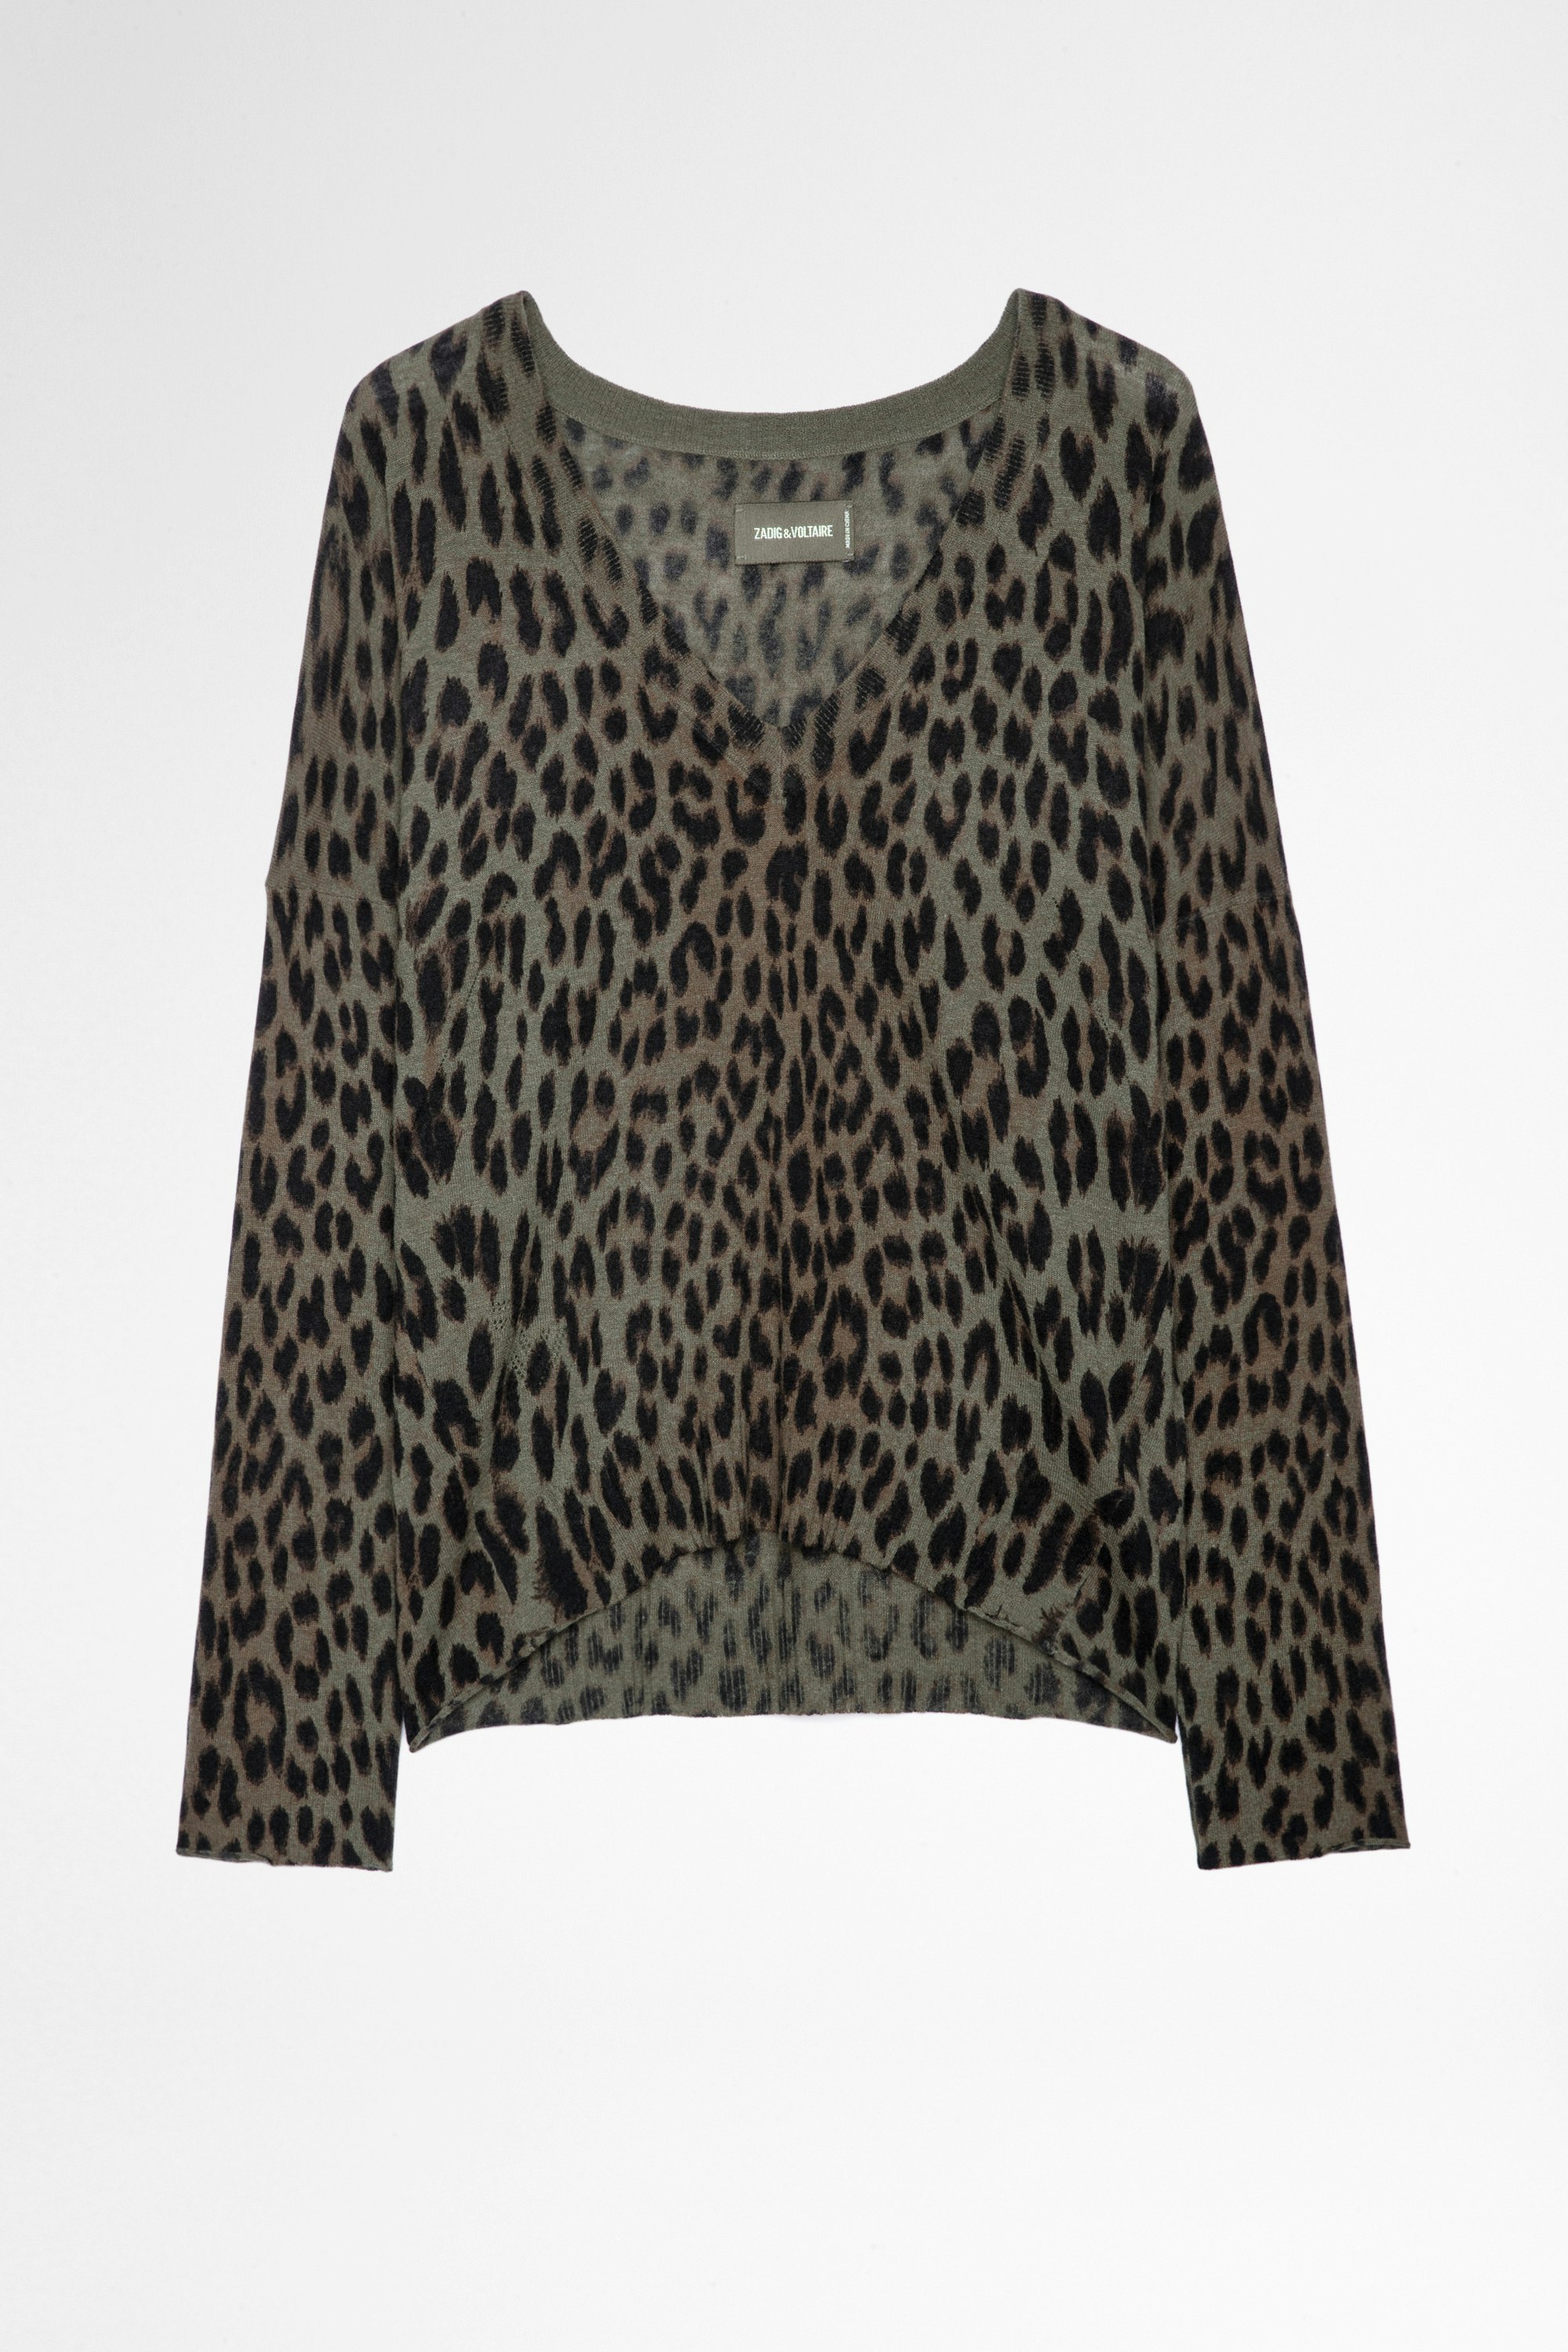 Brume Cashmere Jumper Women's khaki cashmere jumper with leopard print